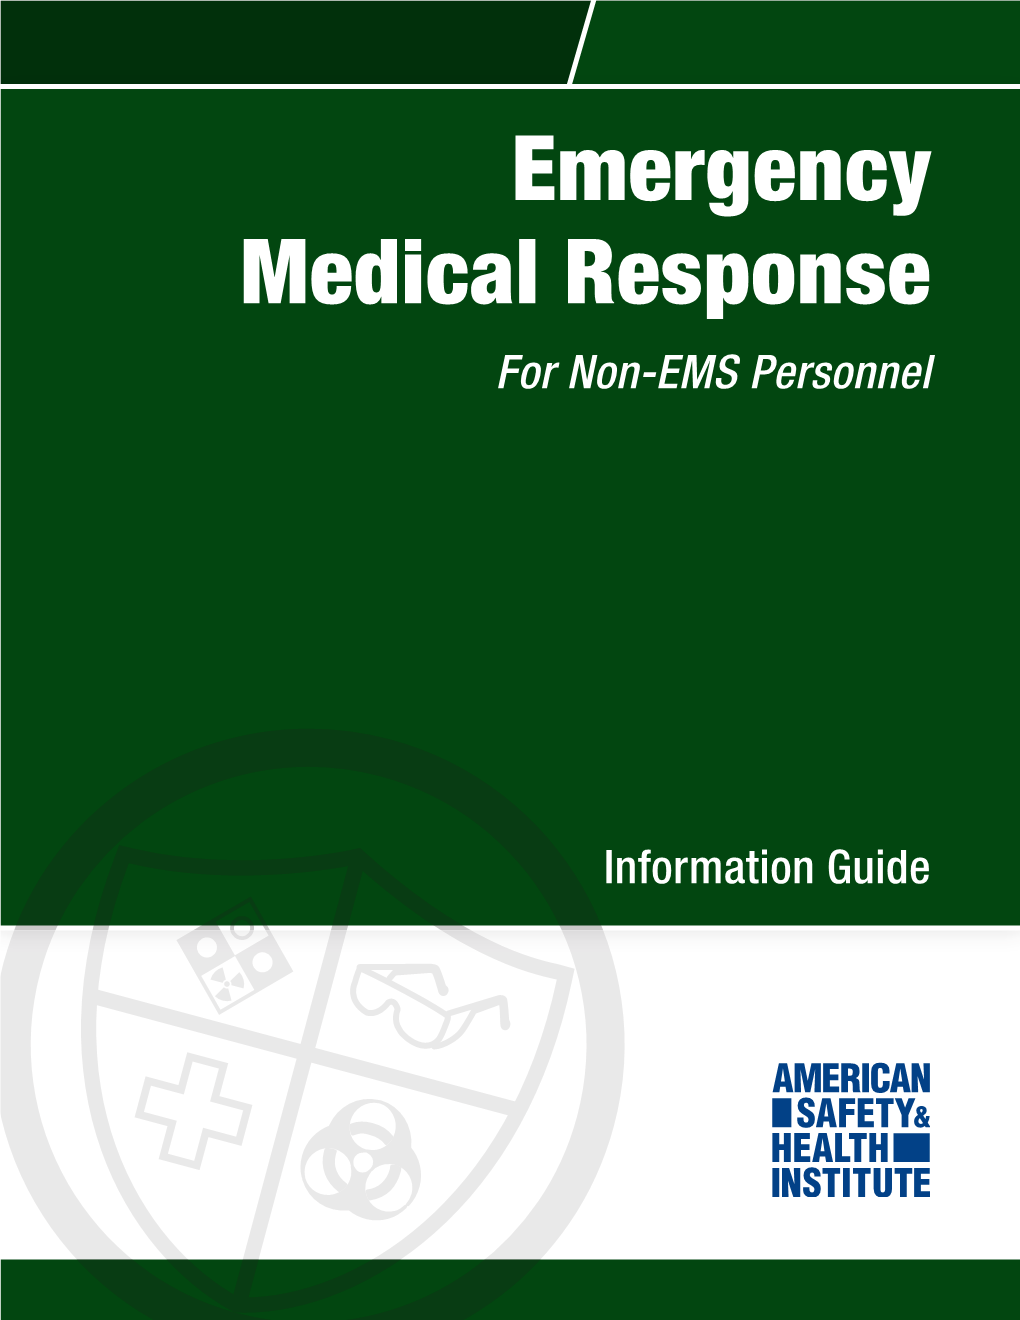 Emergency Medical Response Information Guide